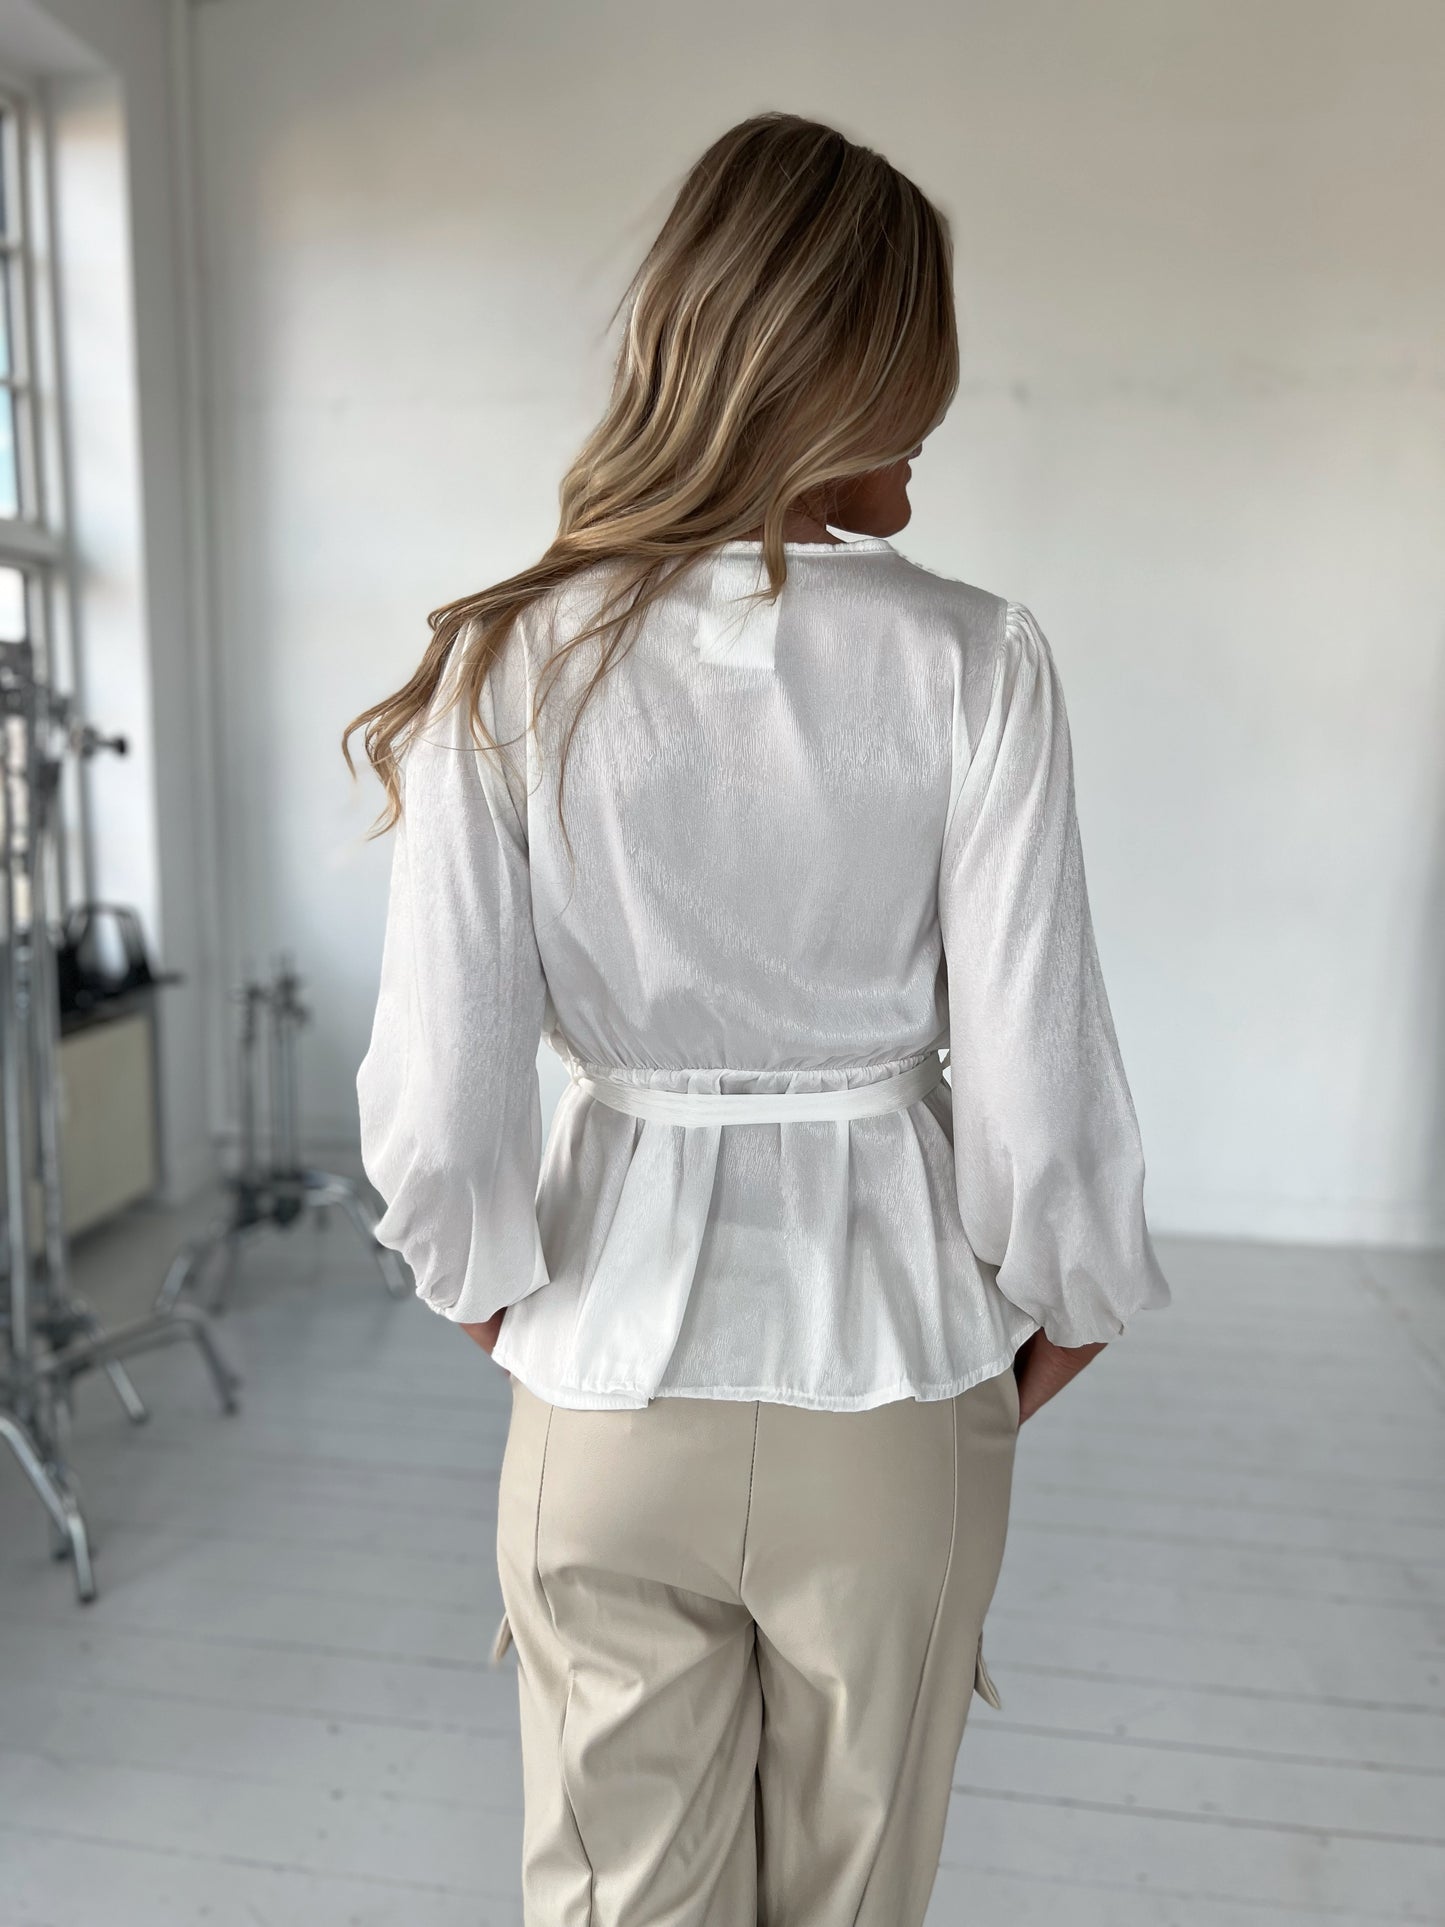 Model i NC hvid shiny bluse fra webshoppen Aaberg Copenhagen